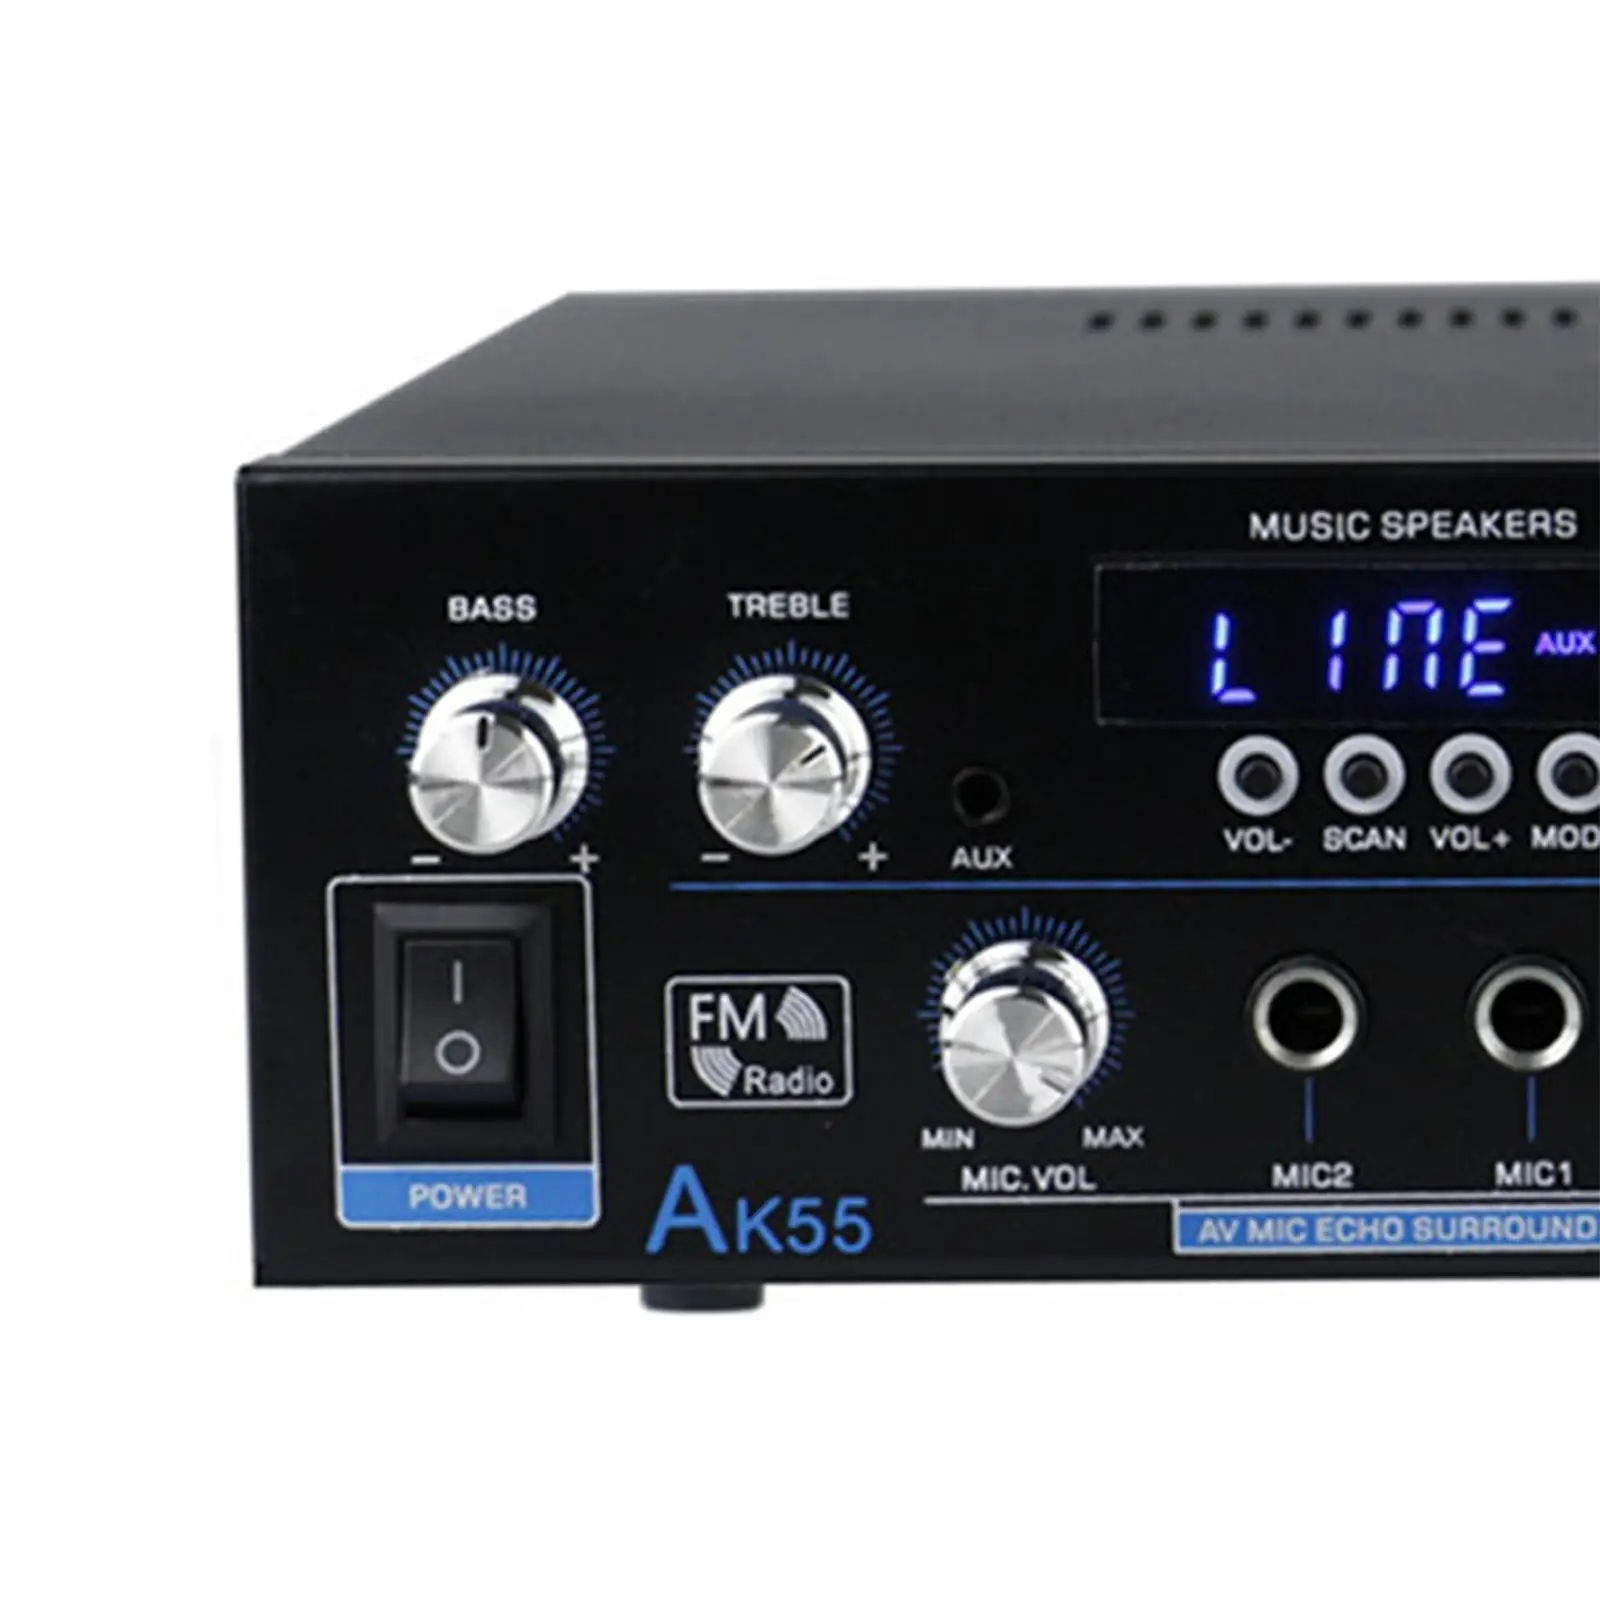 AK-55 Amplifier Echo Reverb Delay for Store Home Theater USB BT FM AUX Mic 2.0 Channel Sound Amplifier Speaker Amplifier US